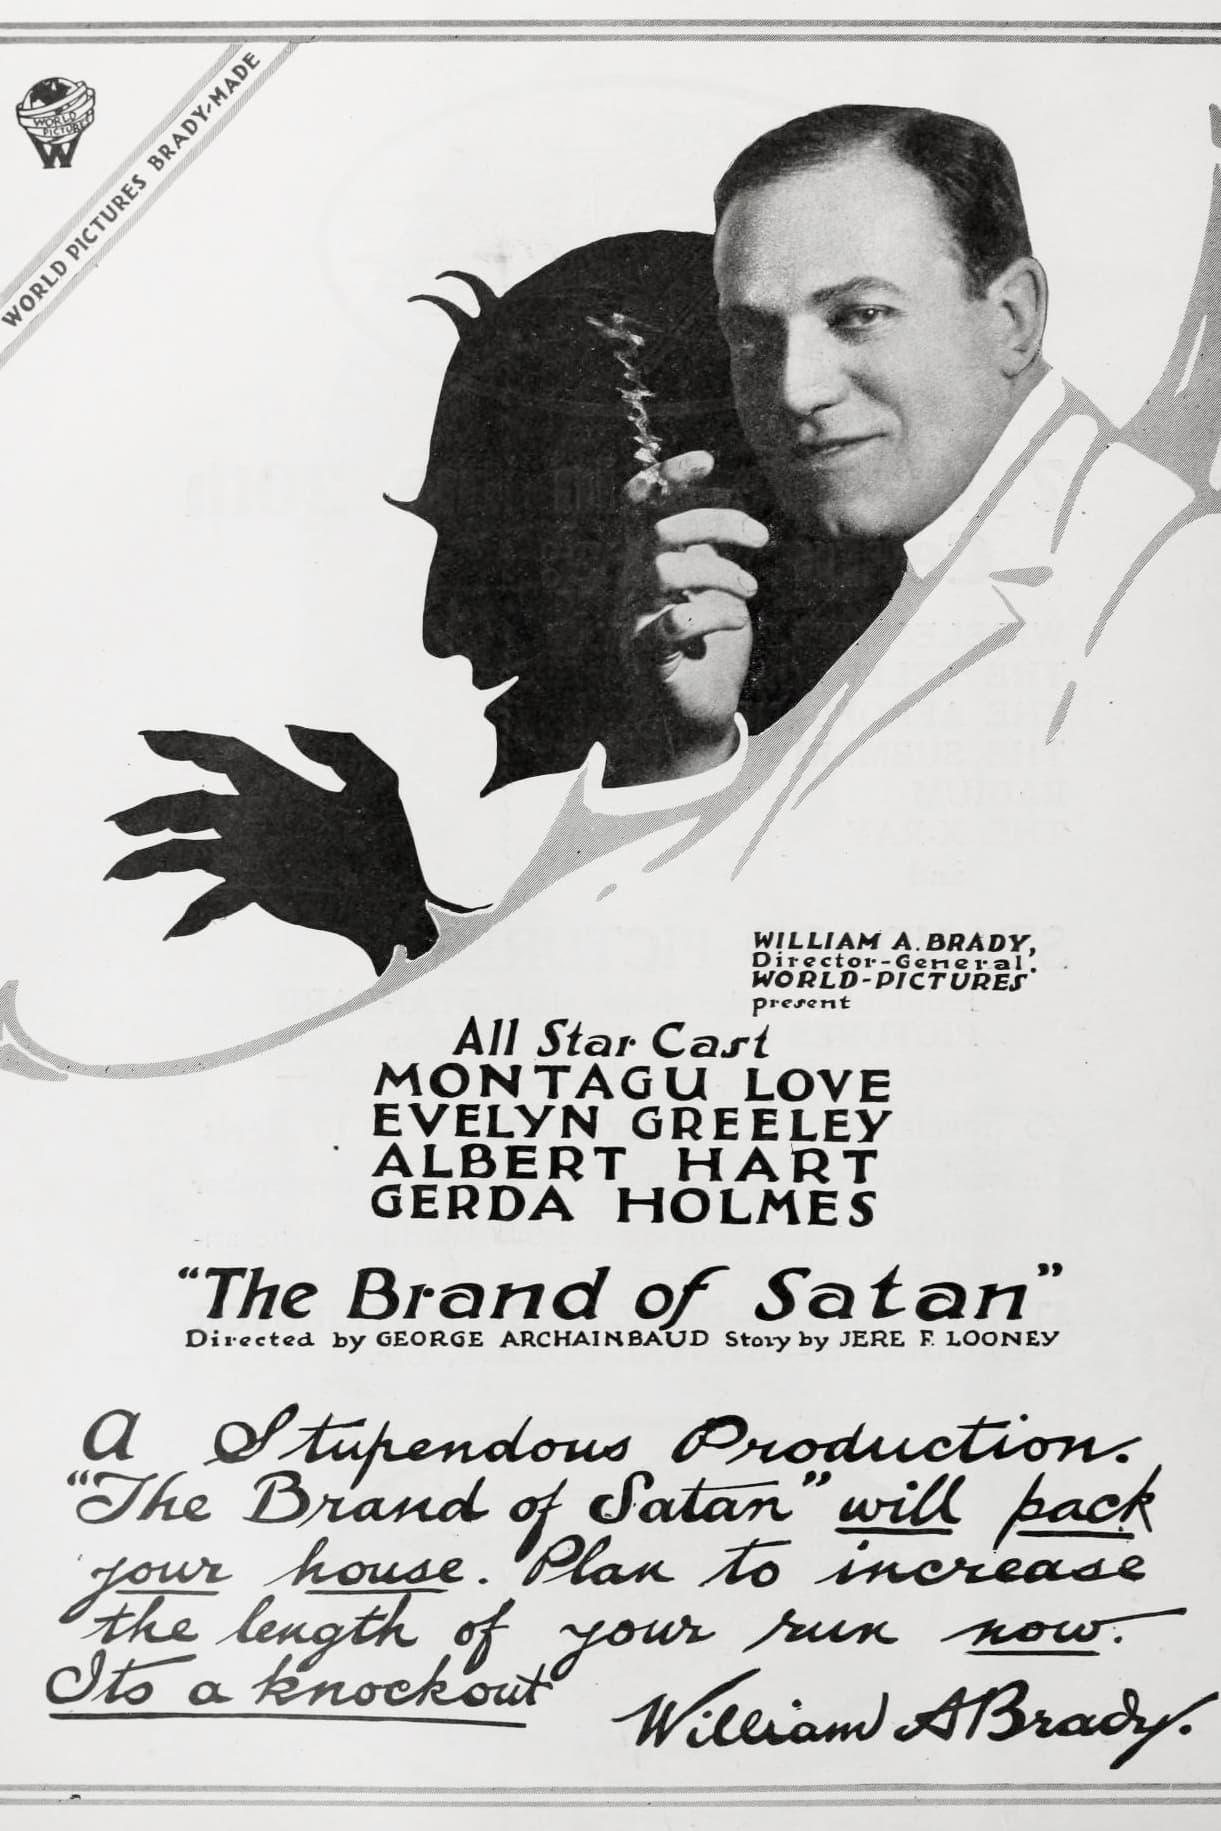 The Brand of Satan poster